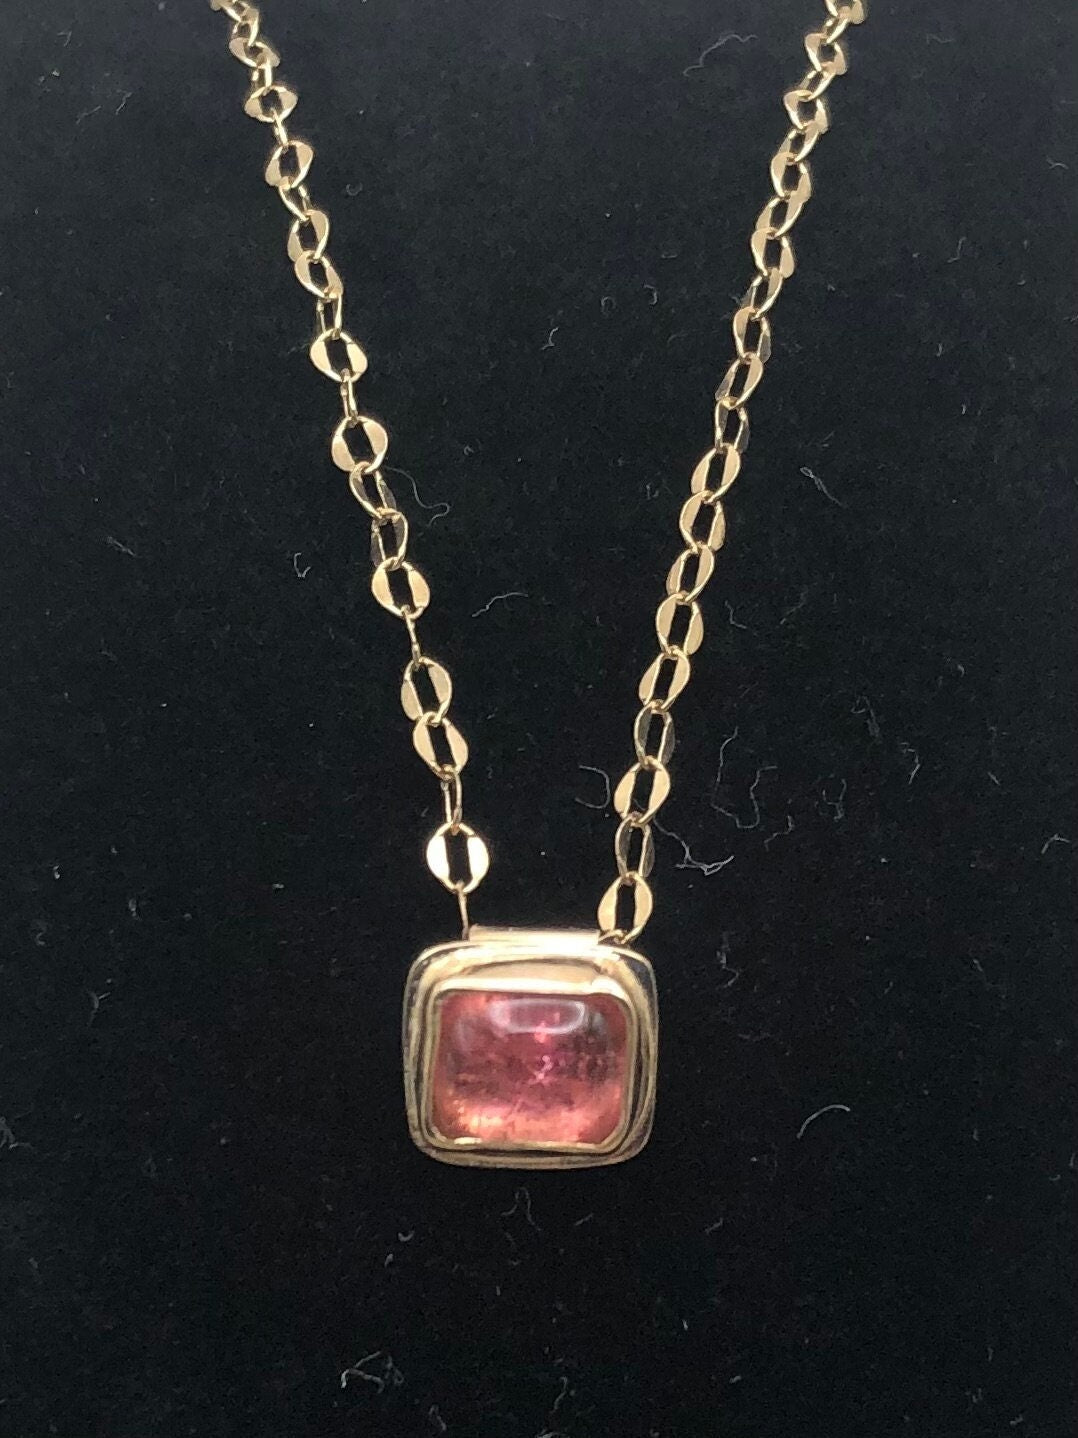 Candy pink tourmaline pendant in solid 14 karat gold